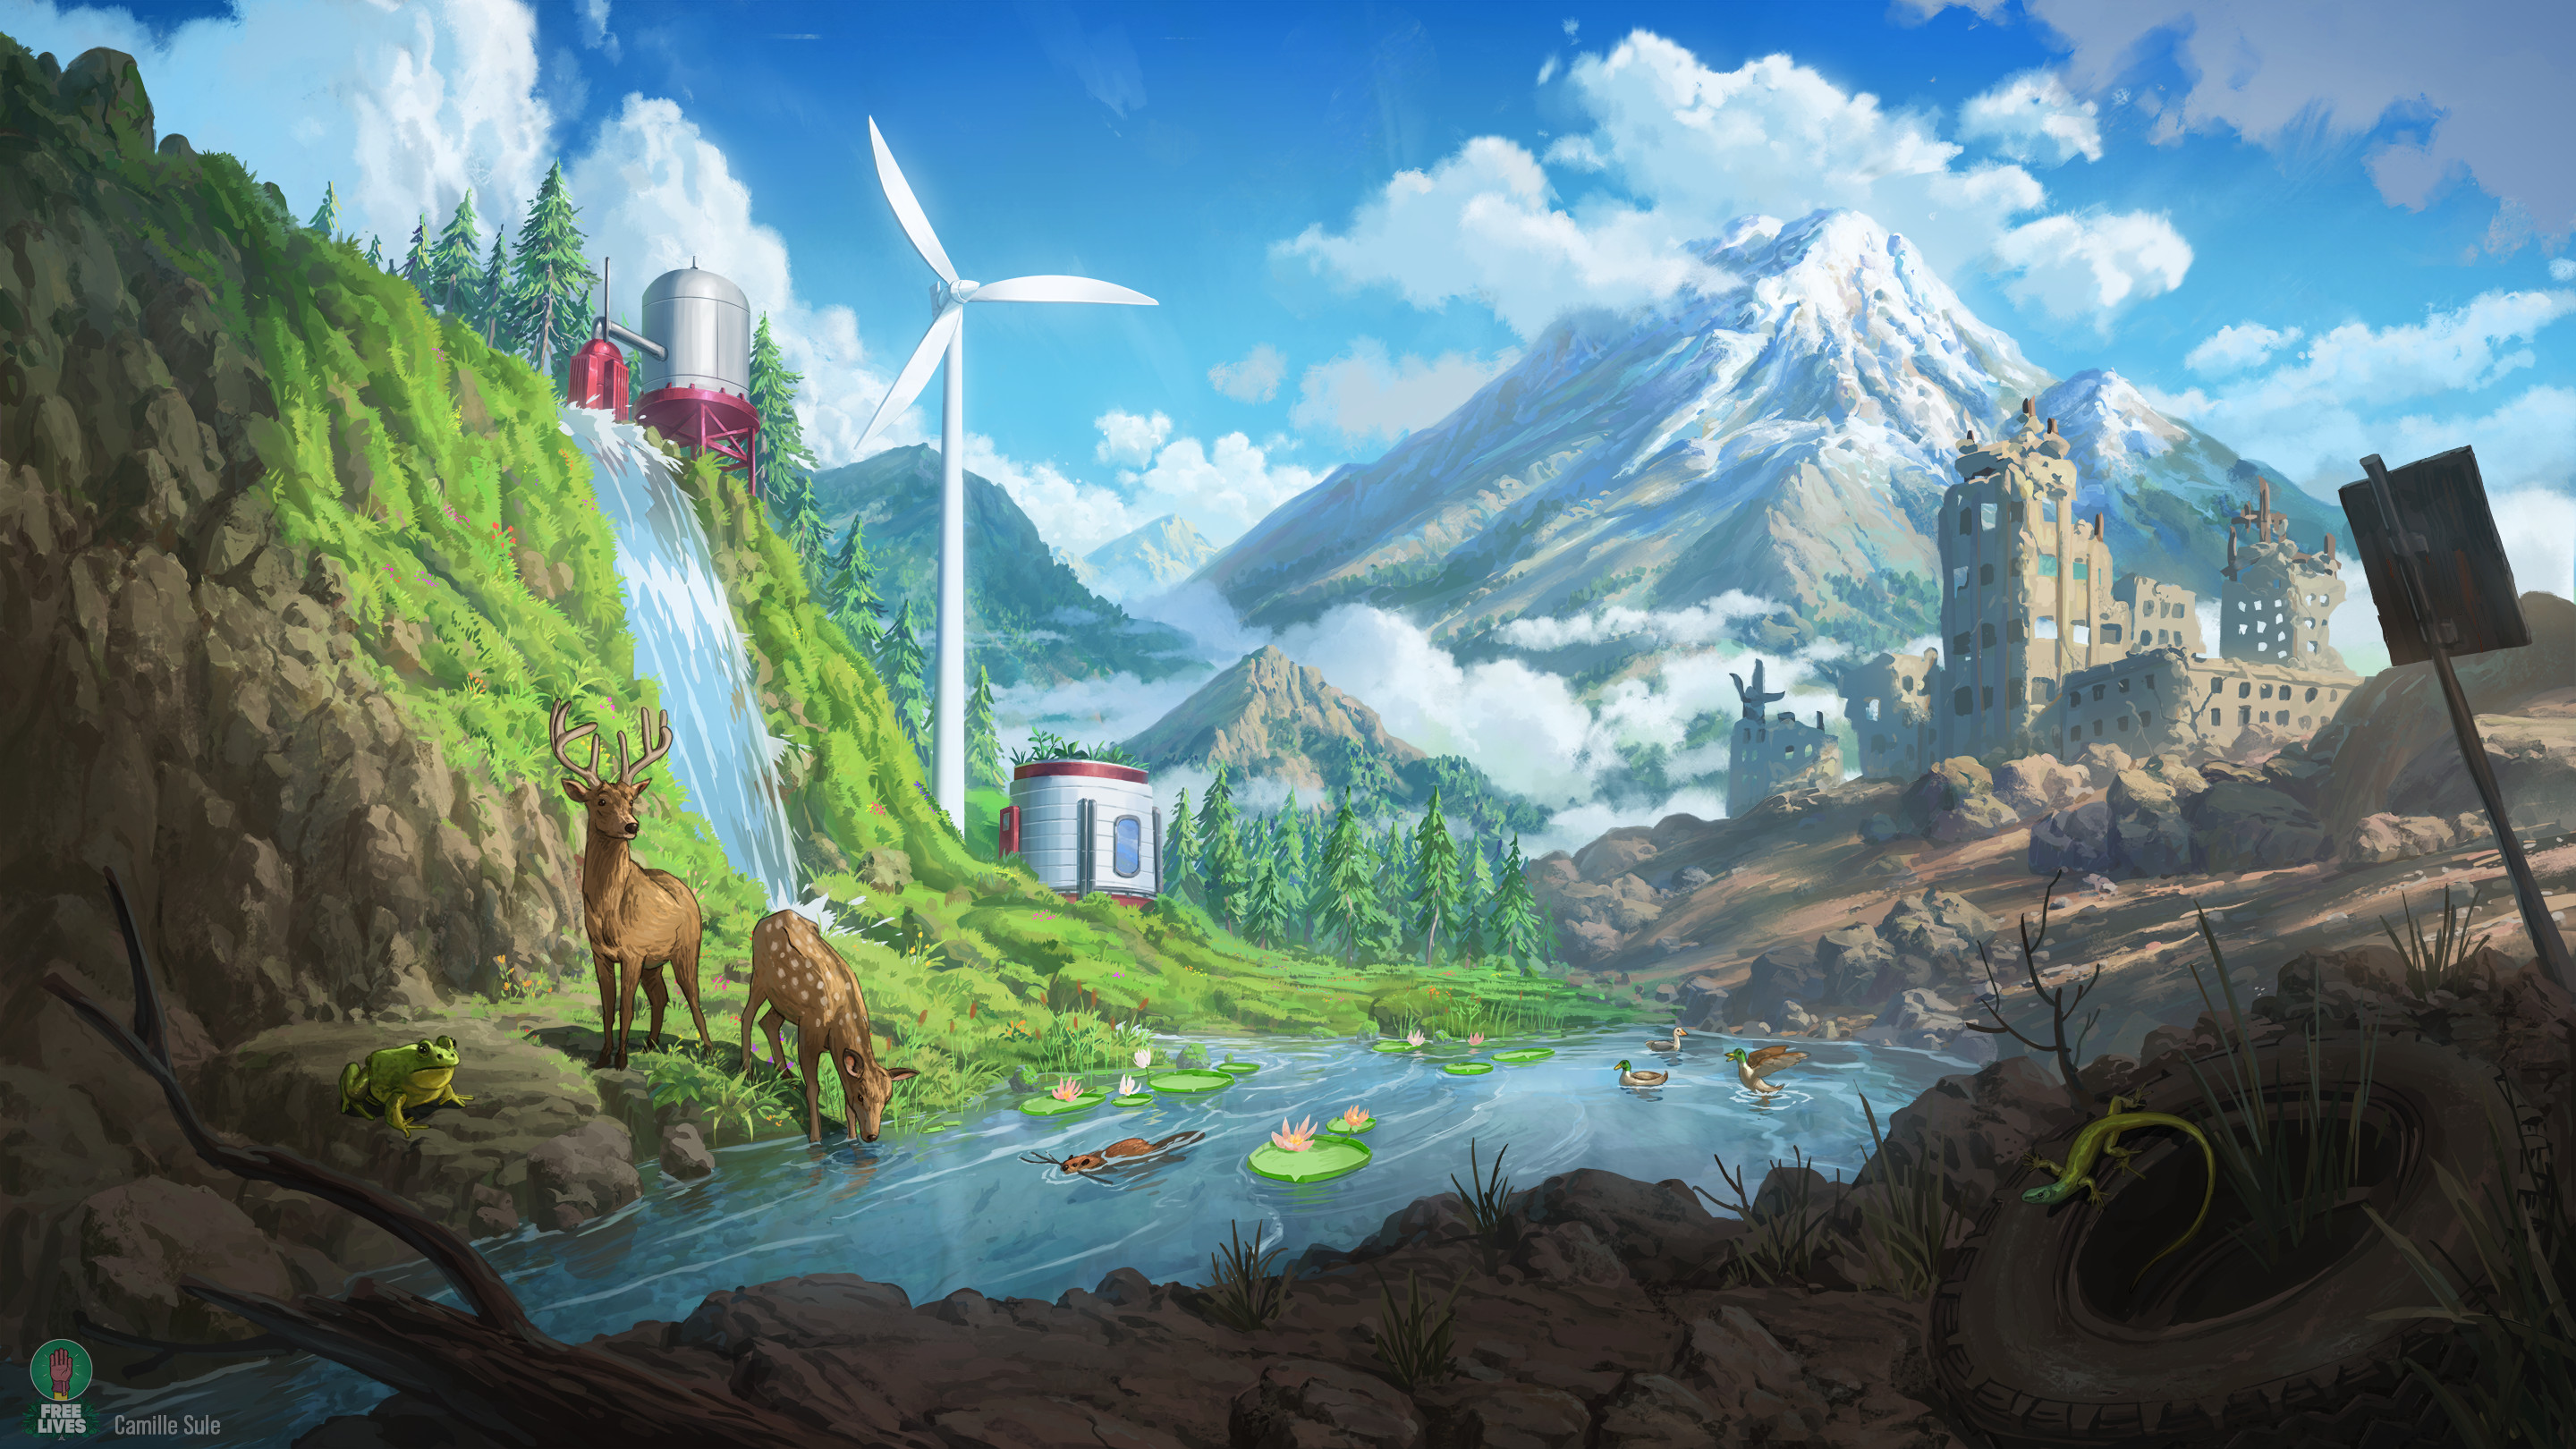 Video Game Terra Nil HD Wallpaper | Background Image